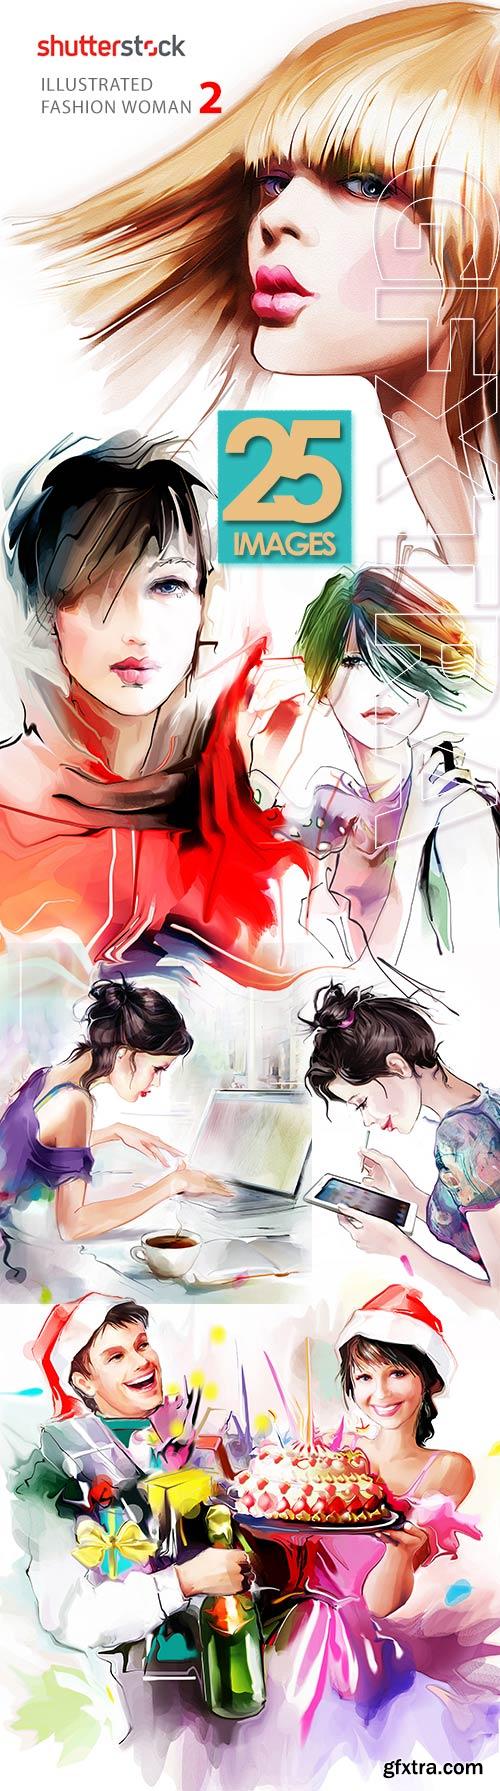 Illustrated Fashion Woman II, 25xJPG Paintings